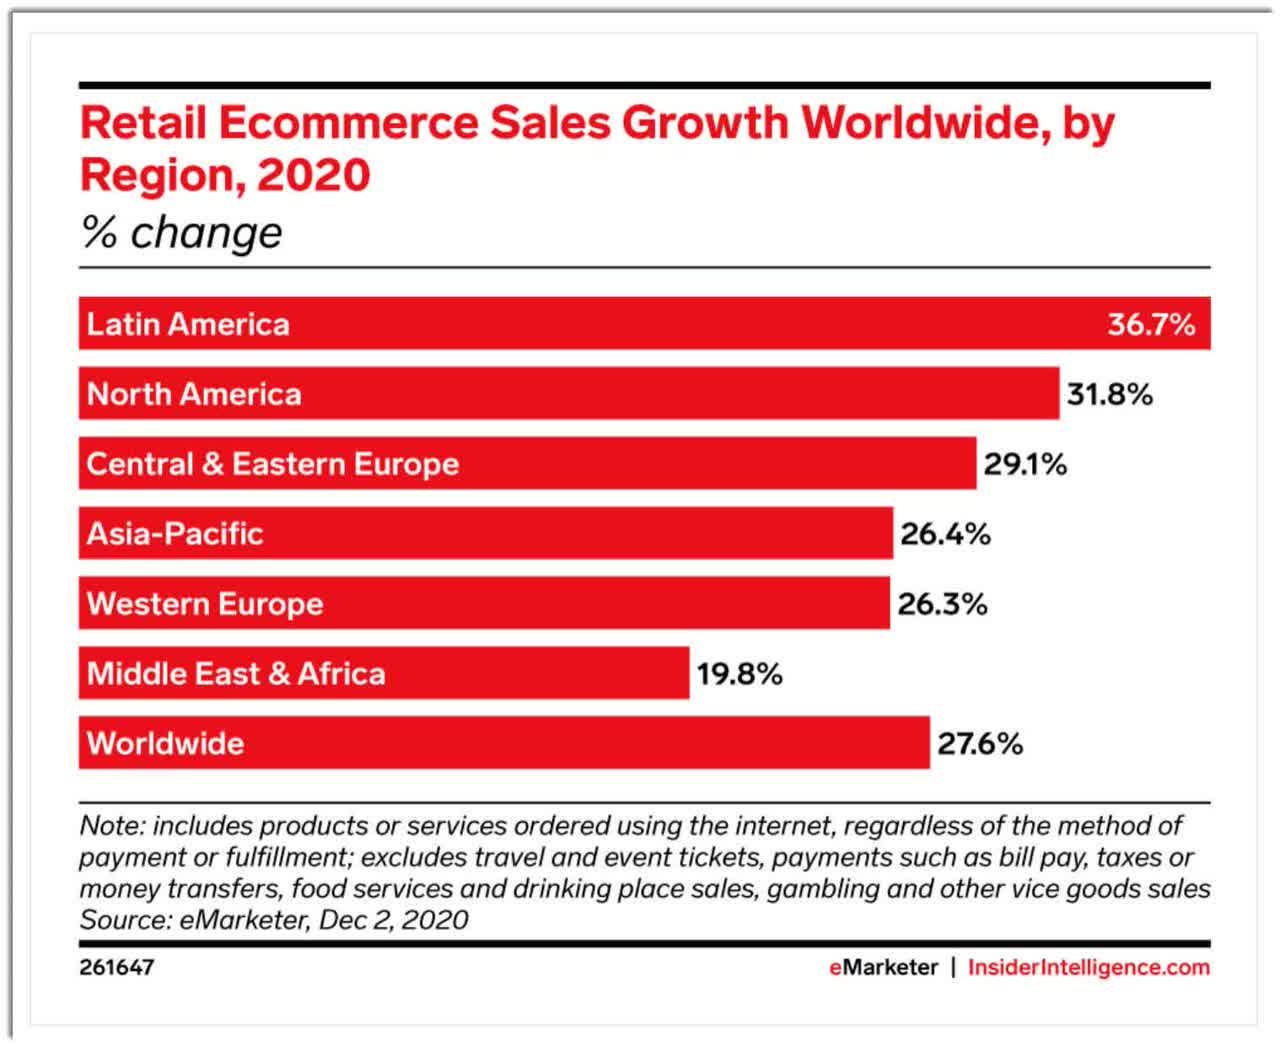 Global Retail Ecommerce